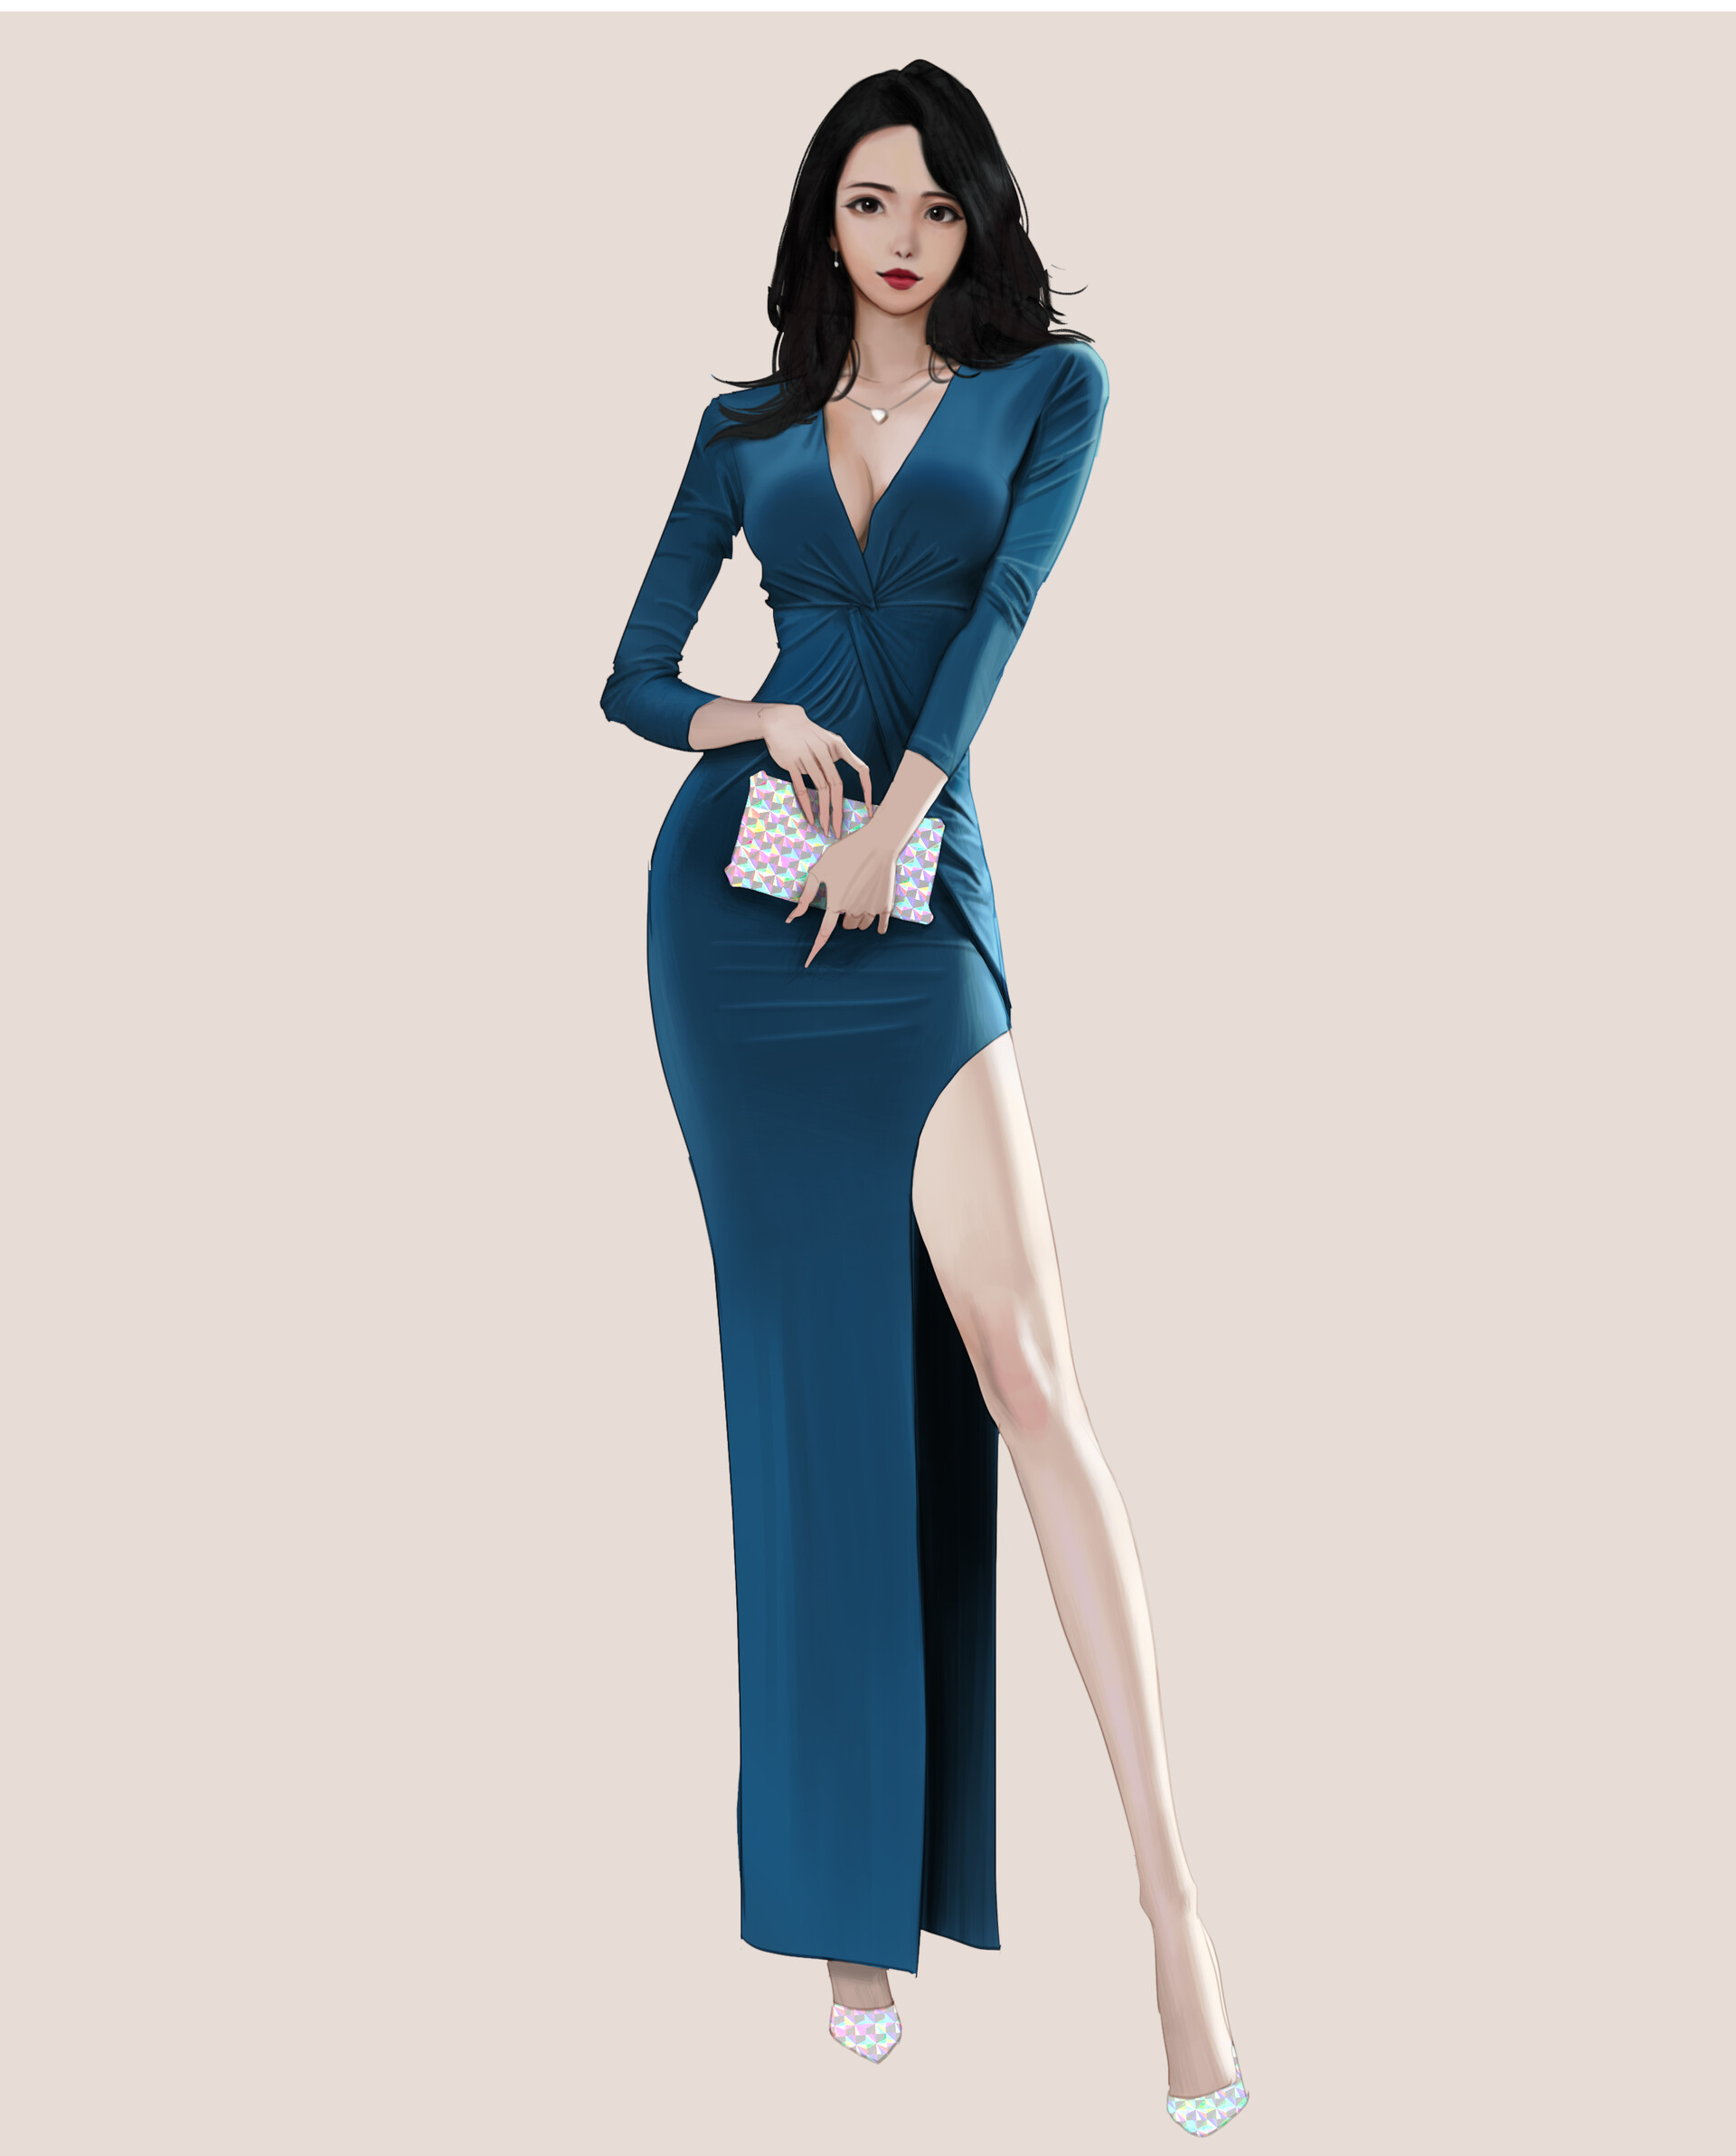 WB Lee Women Dark Hair Black Hair Brown Eyes Dress Blue Dress Artwork Fan Art Digital Art Asian 1920x2384